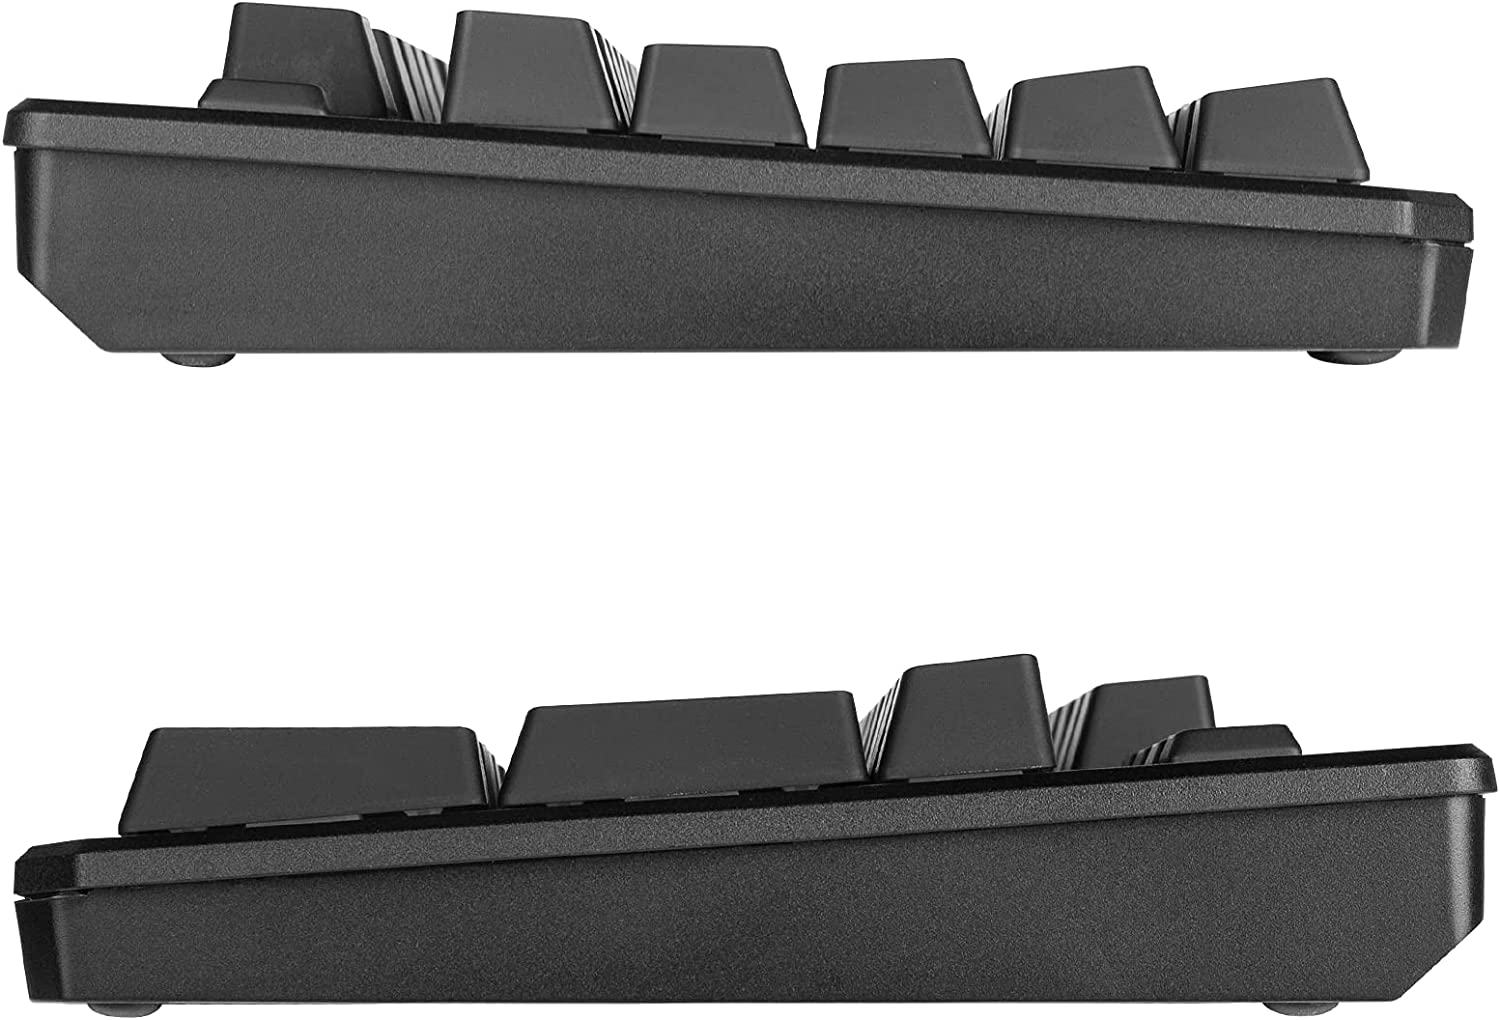 EVGA Z12 Gaming Tastatur 834-W0-12DE-K2, QWERTZ (DE), 5-Zonen-RGB, USB, Kabelgebunden